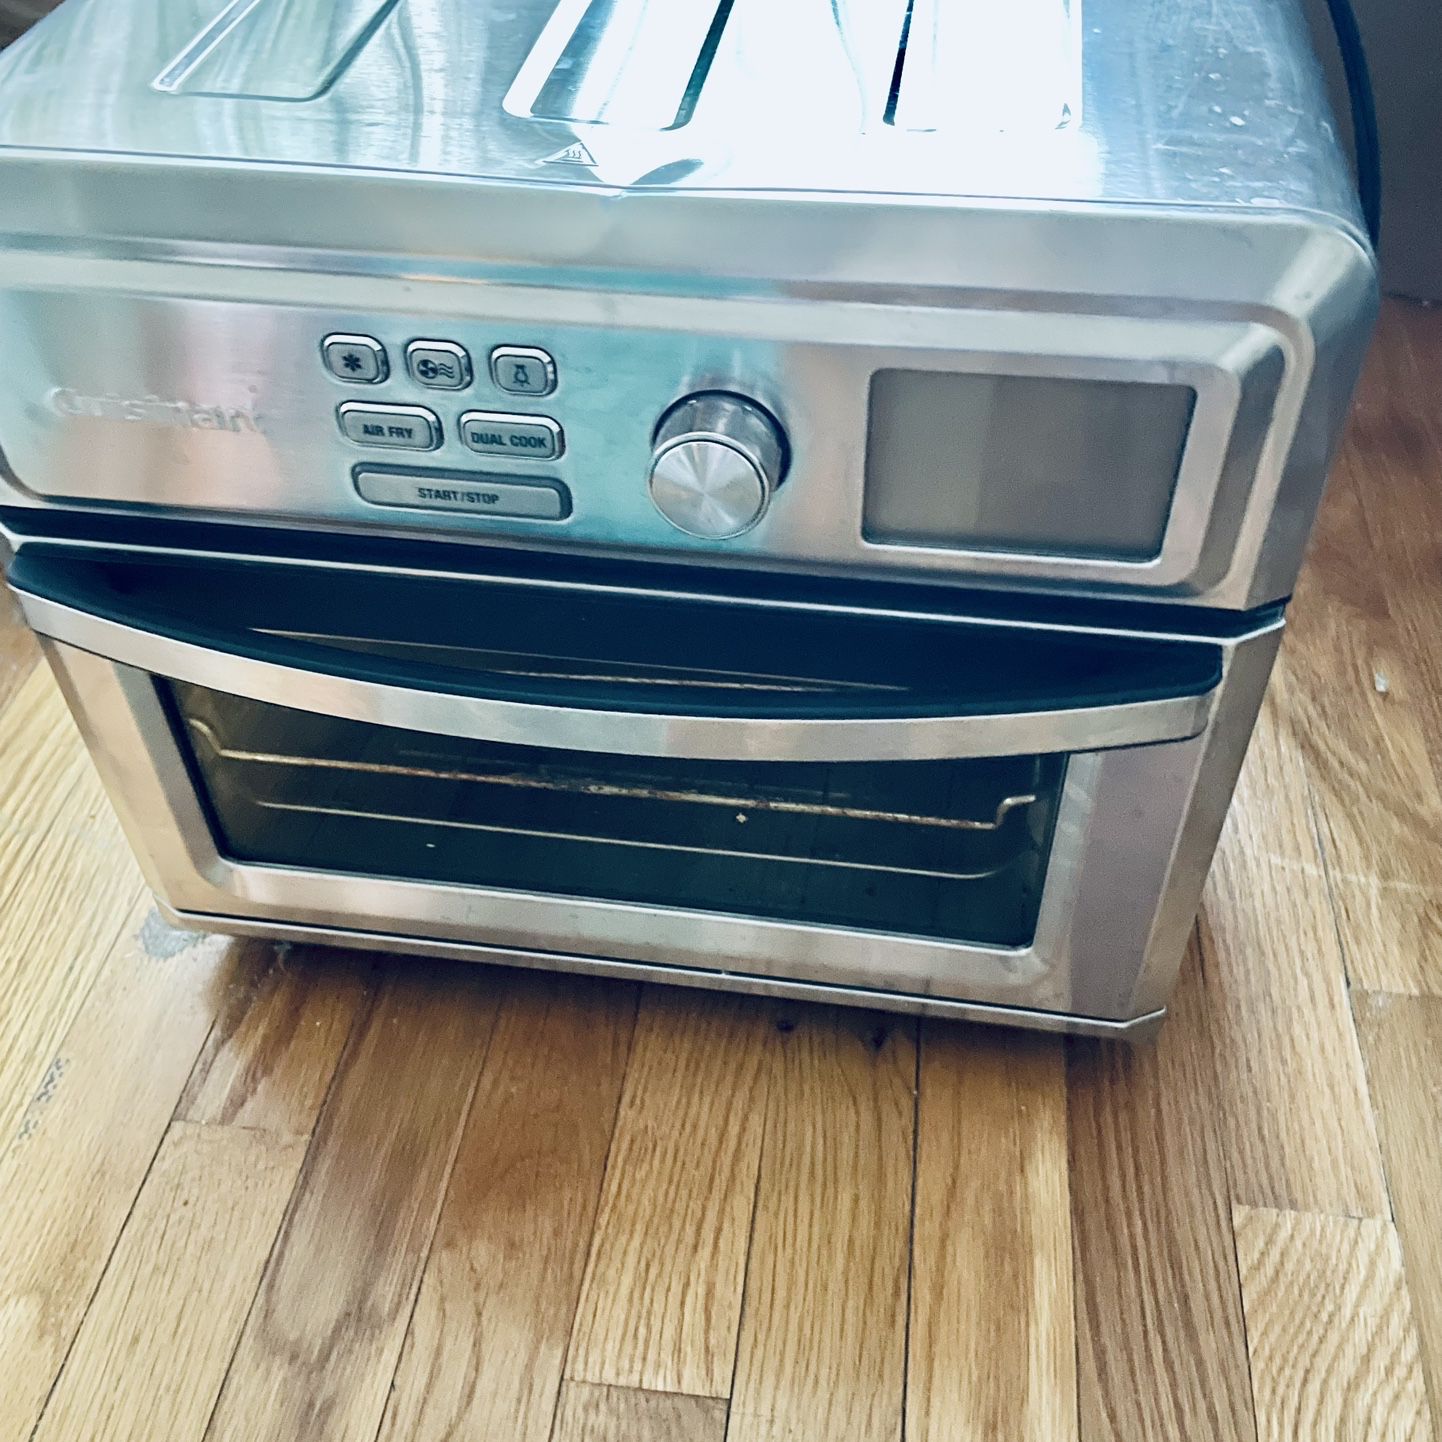 Digital Air Fryer Toaster Oven